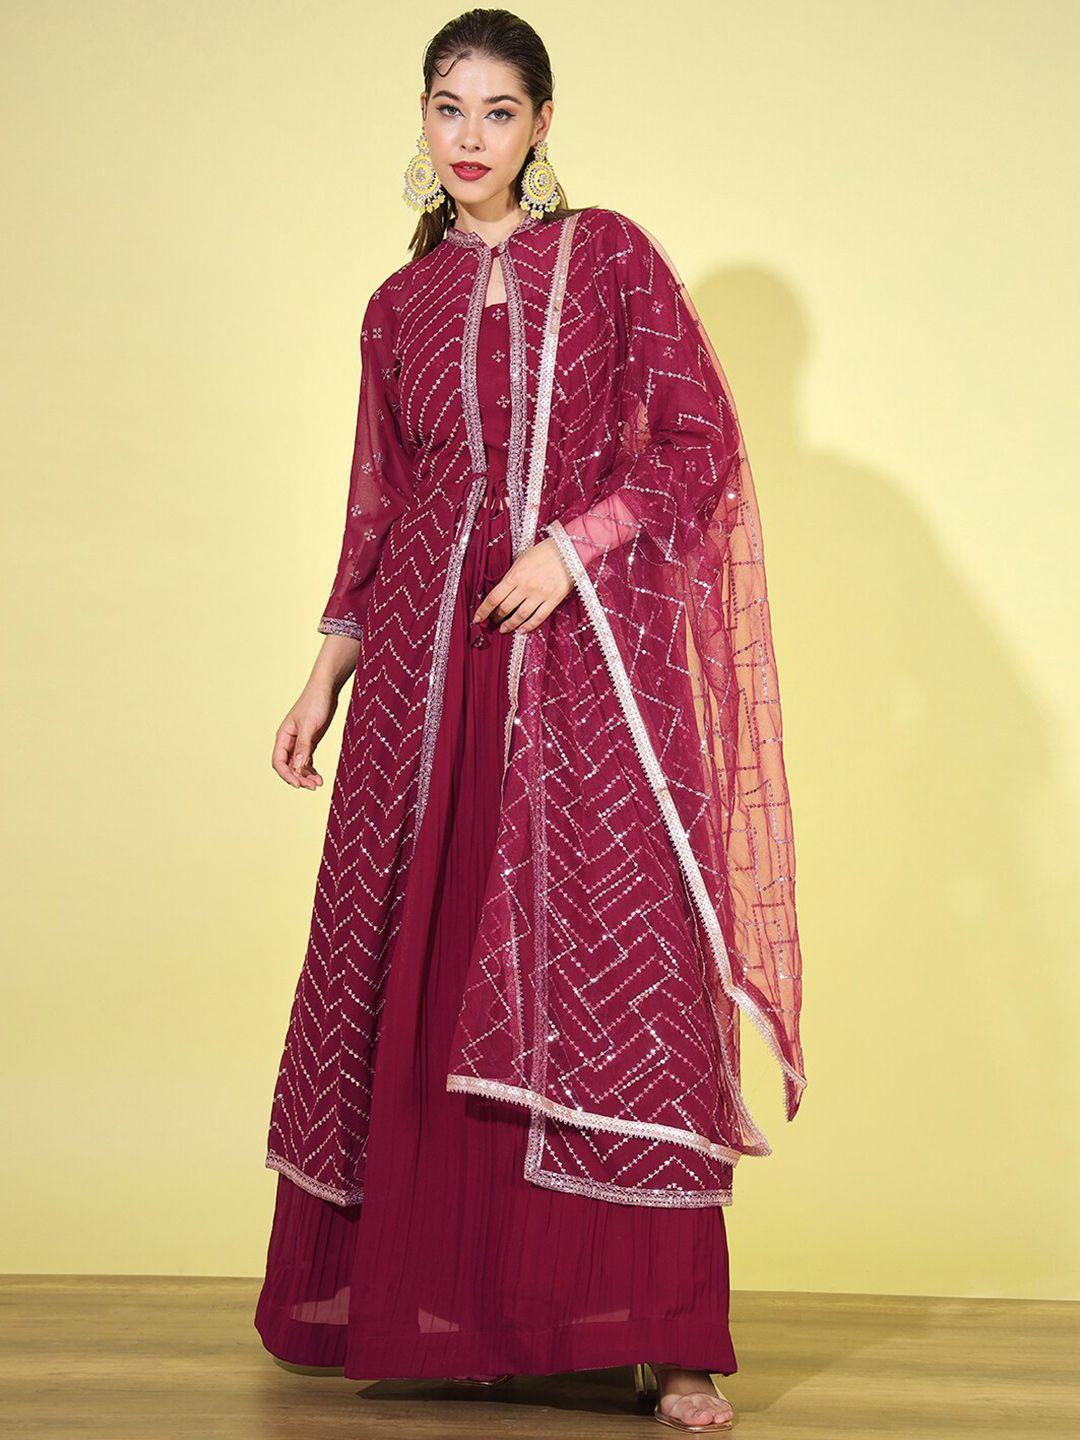 chhabra 555 embroidered lehenga choli with sequined long jacket